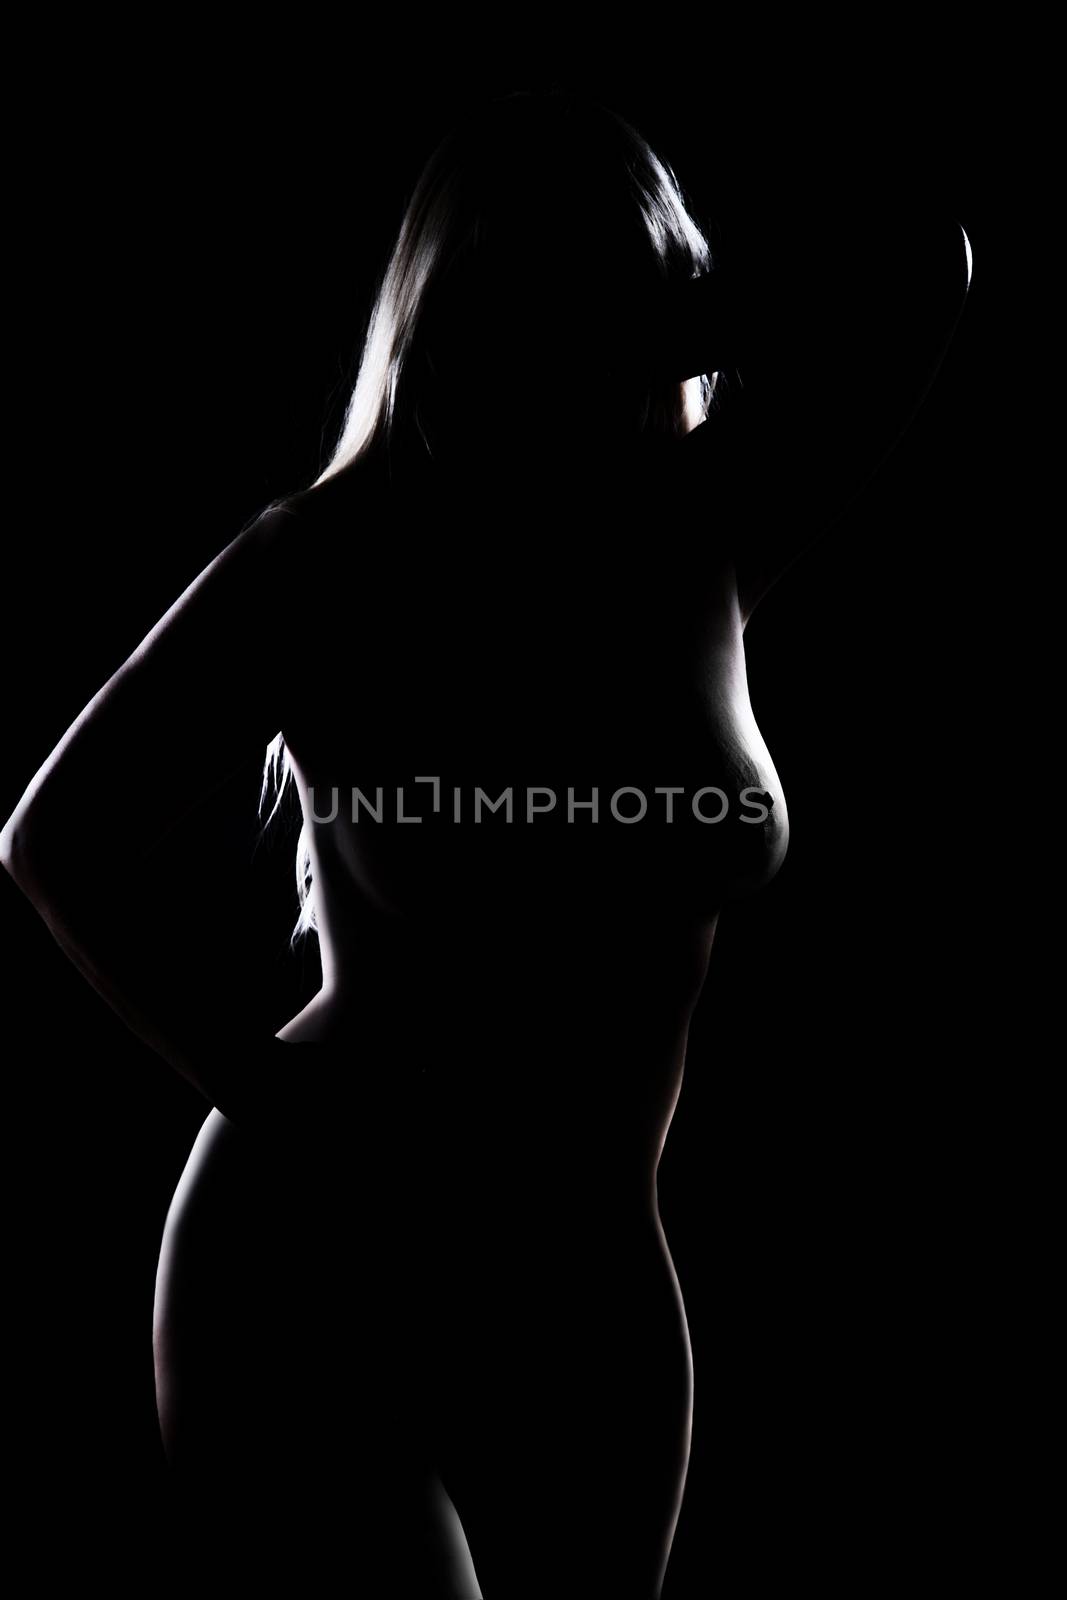 One sensual shot of a woman in underwear